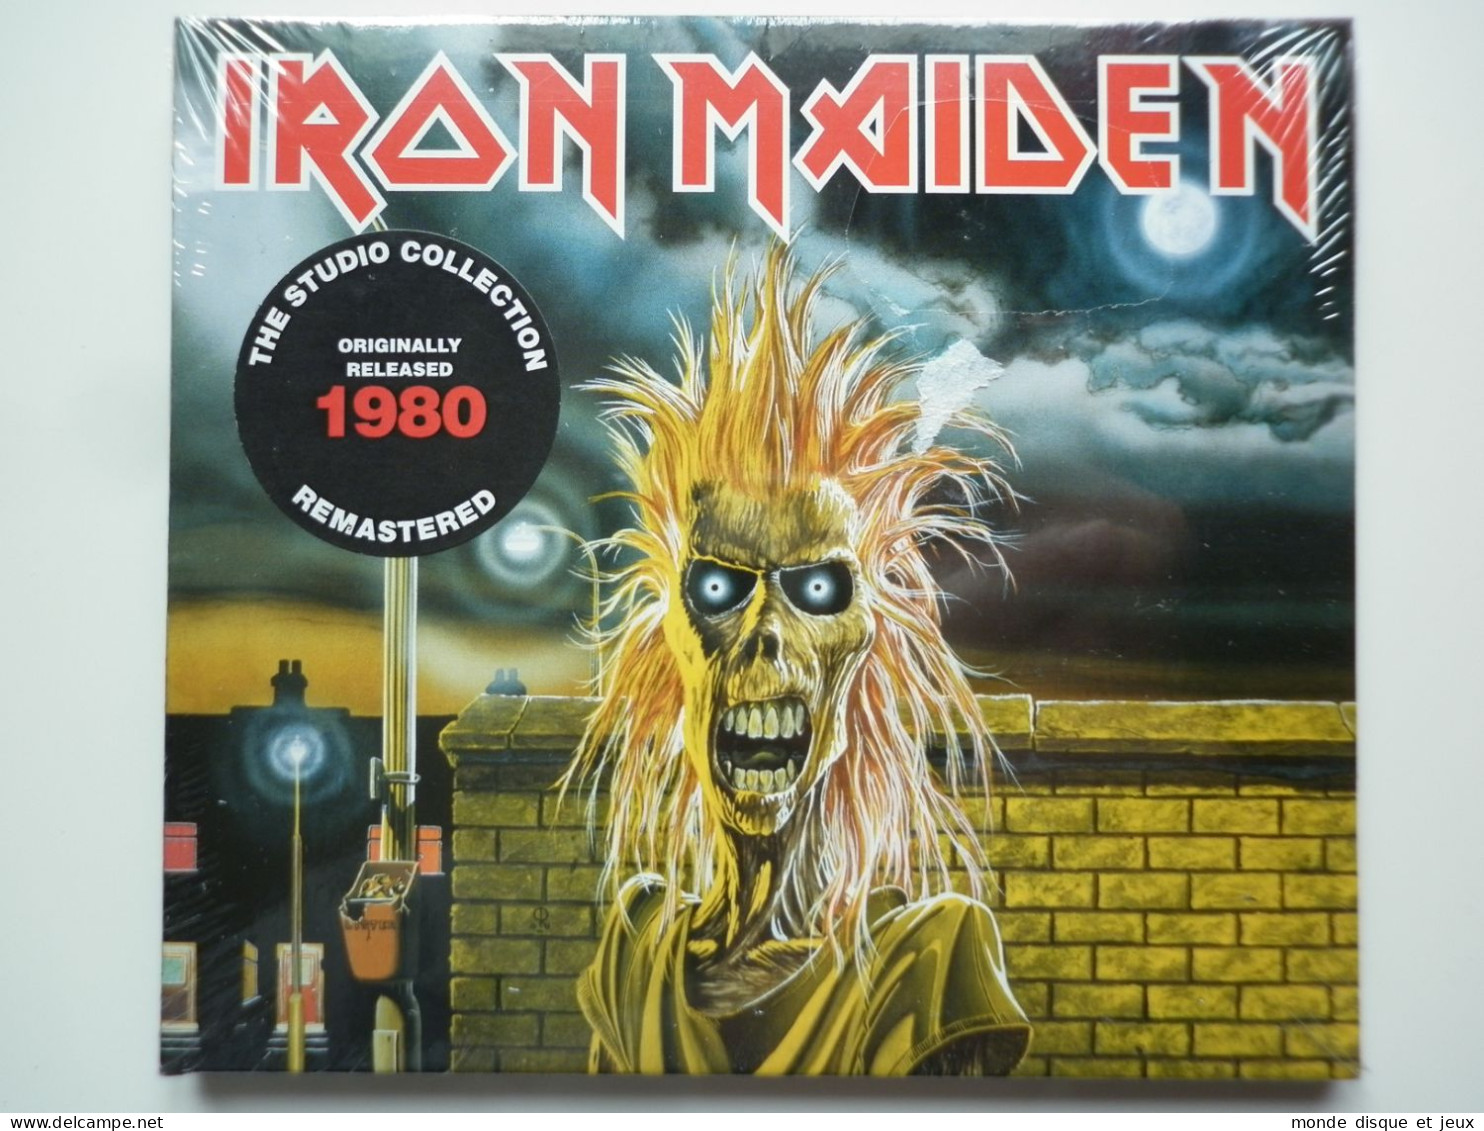 Iron Maiden Cd Album Digipack Iron Maiden - Other - French Music